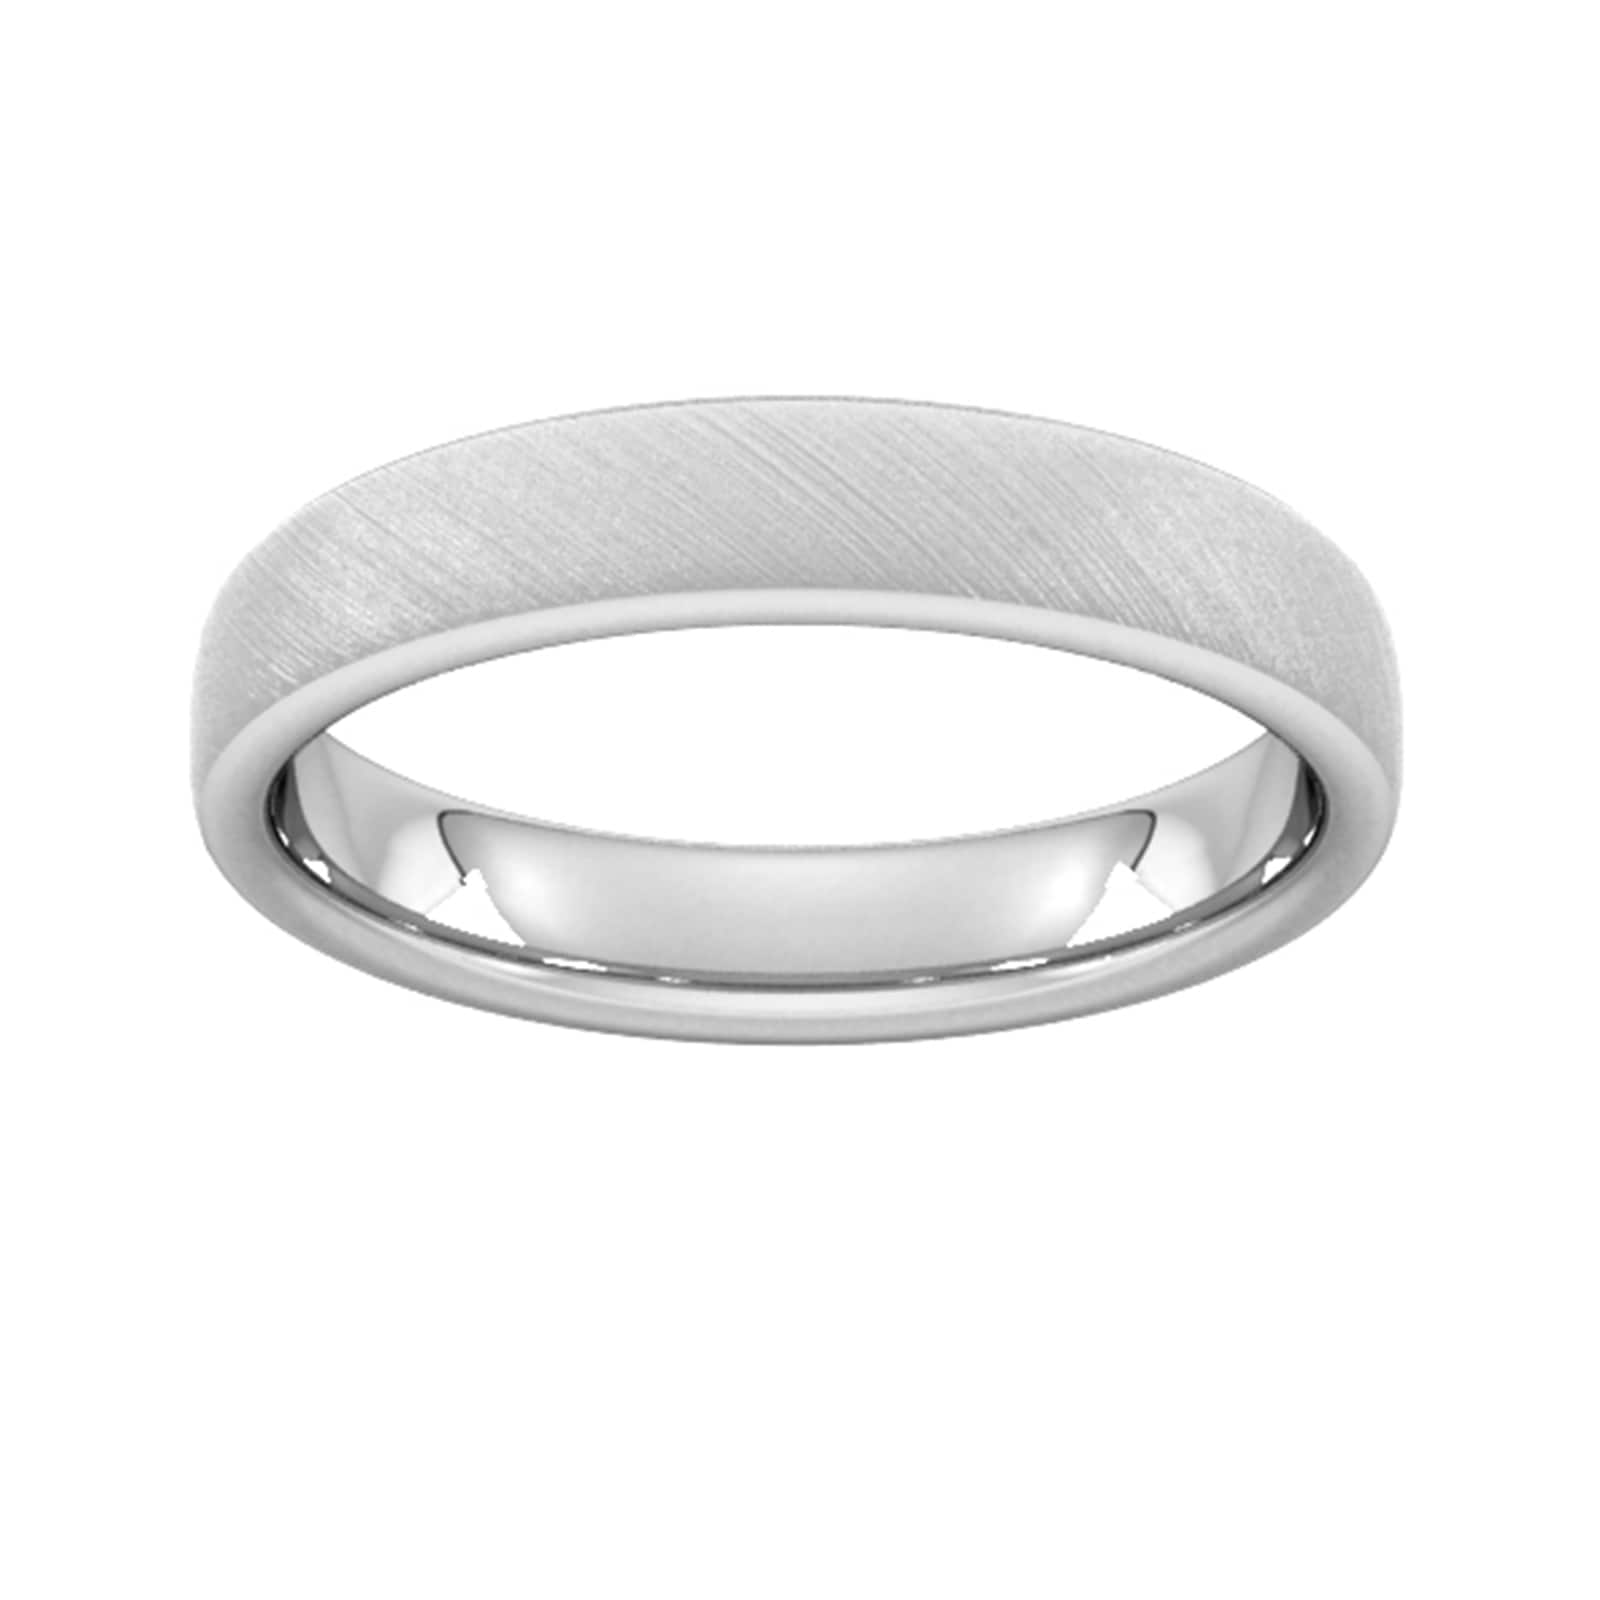 4mm Slight Court Standard Diagonal Matt Finish Wedding Ring In 18 Carat White Gold - Ring Size N